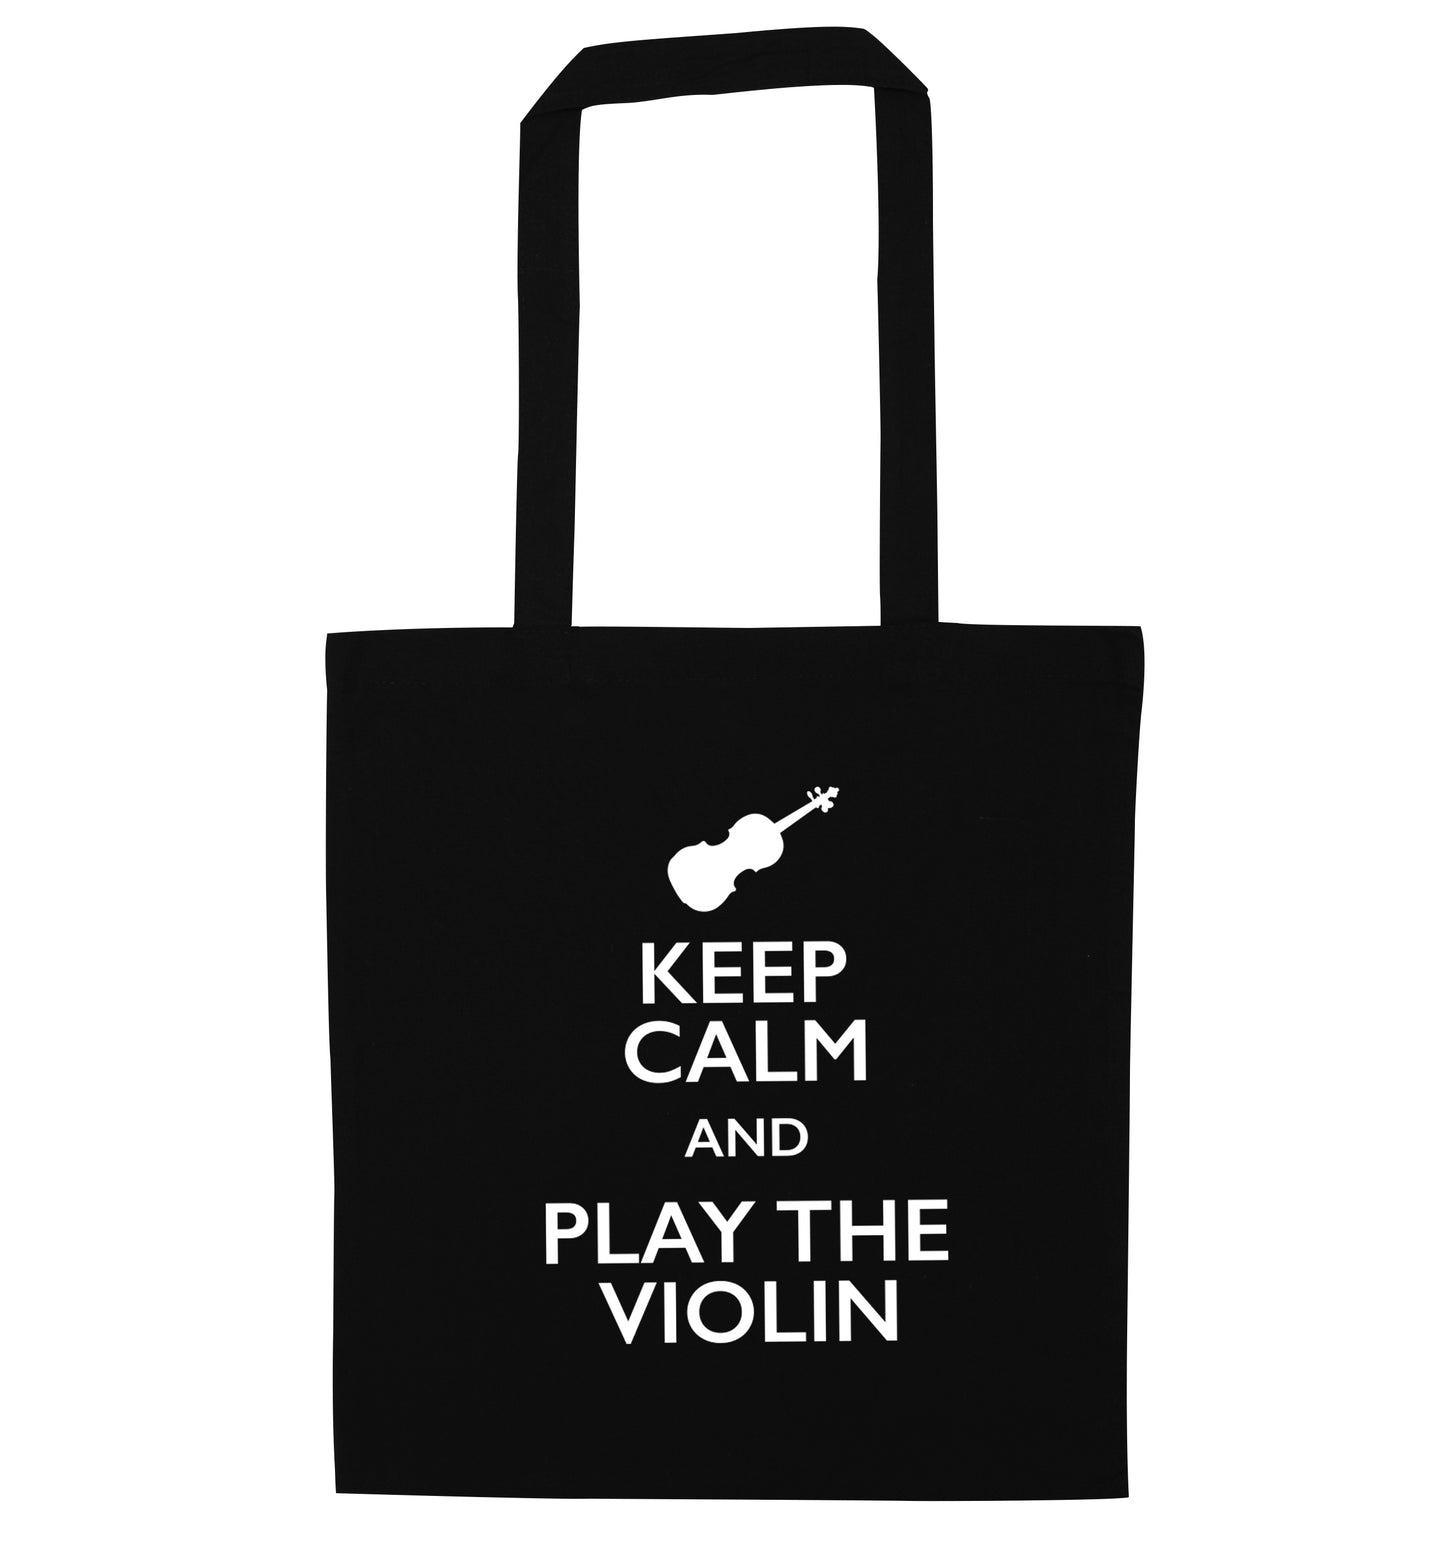 Keep calm and play the violin black tote bag